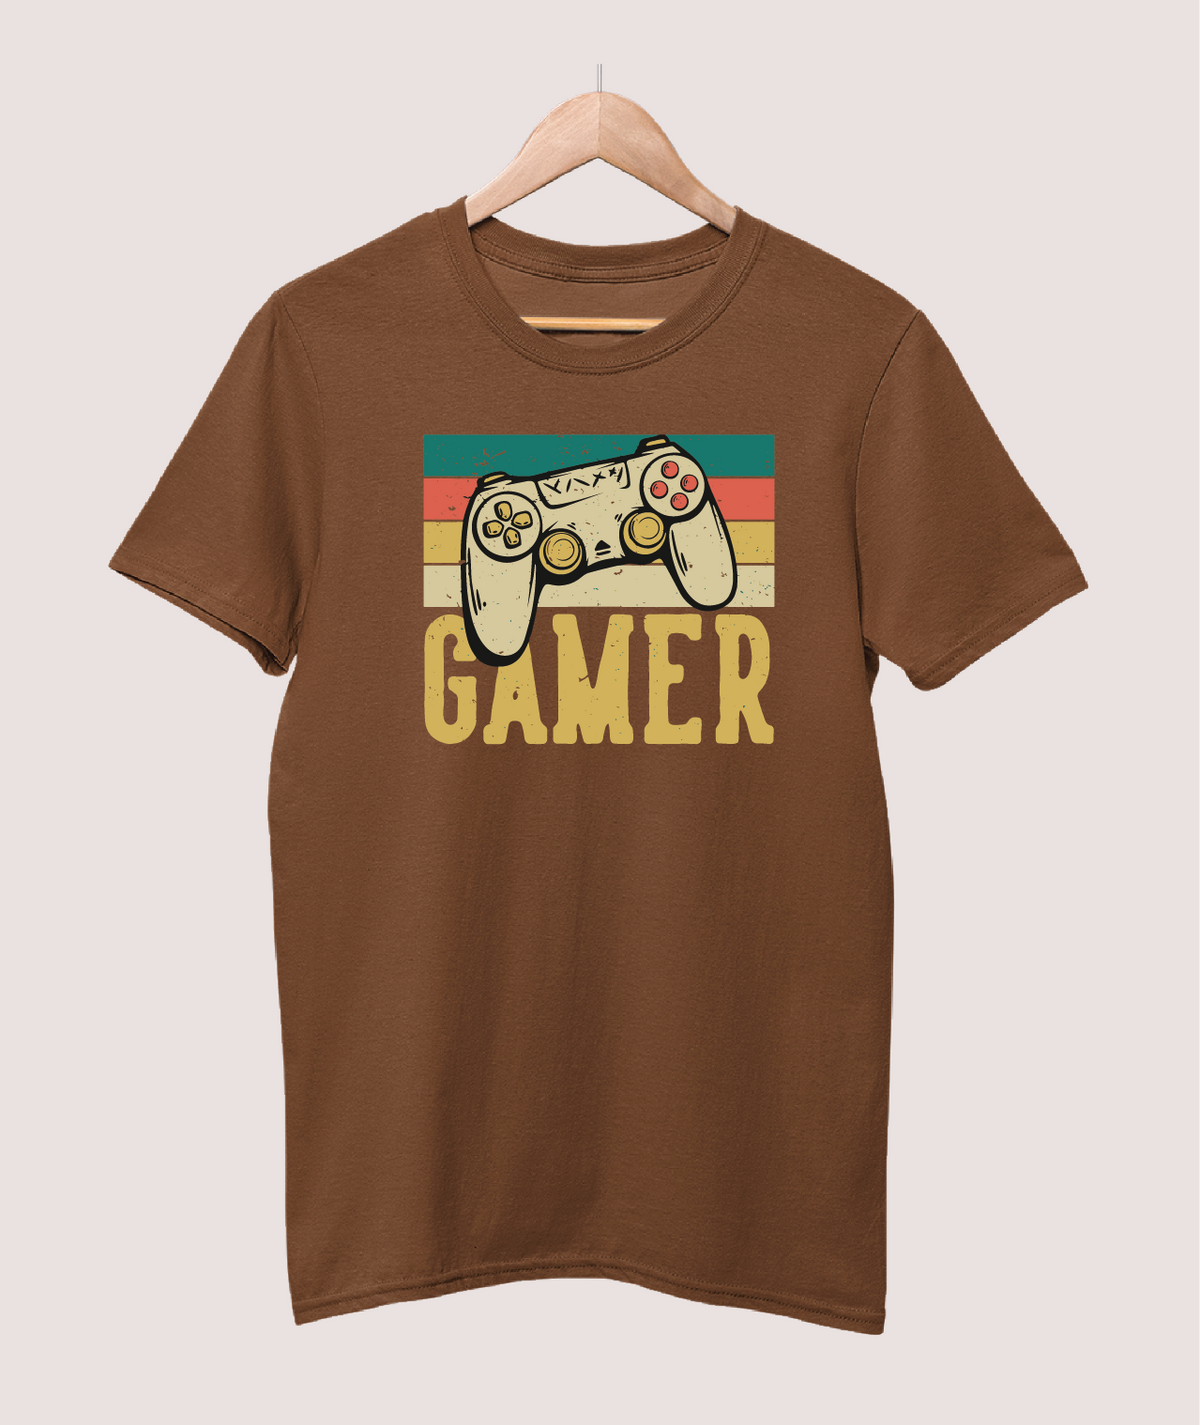 Retro gamer gaming T-shirt